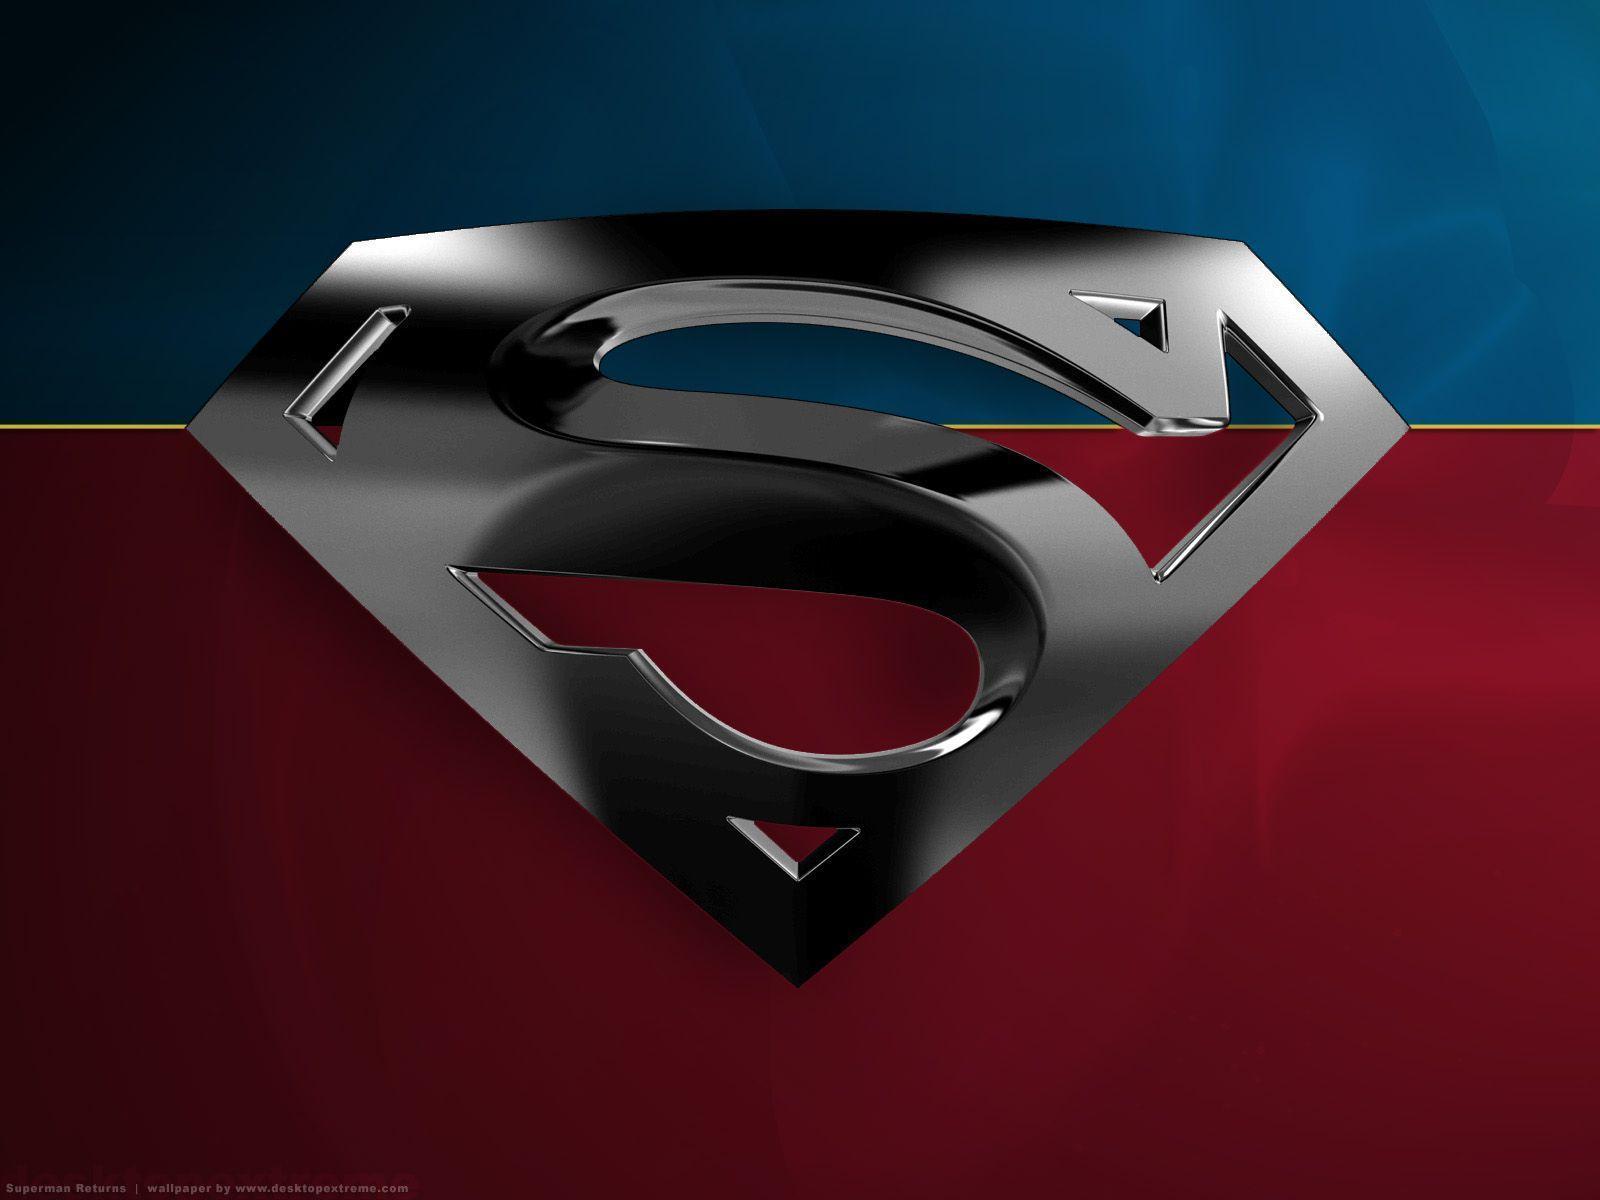 Wallpaper For > Superman Logo Wallpaper Desktop